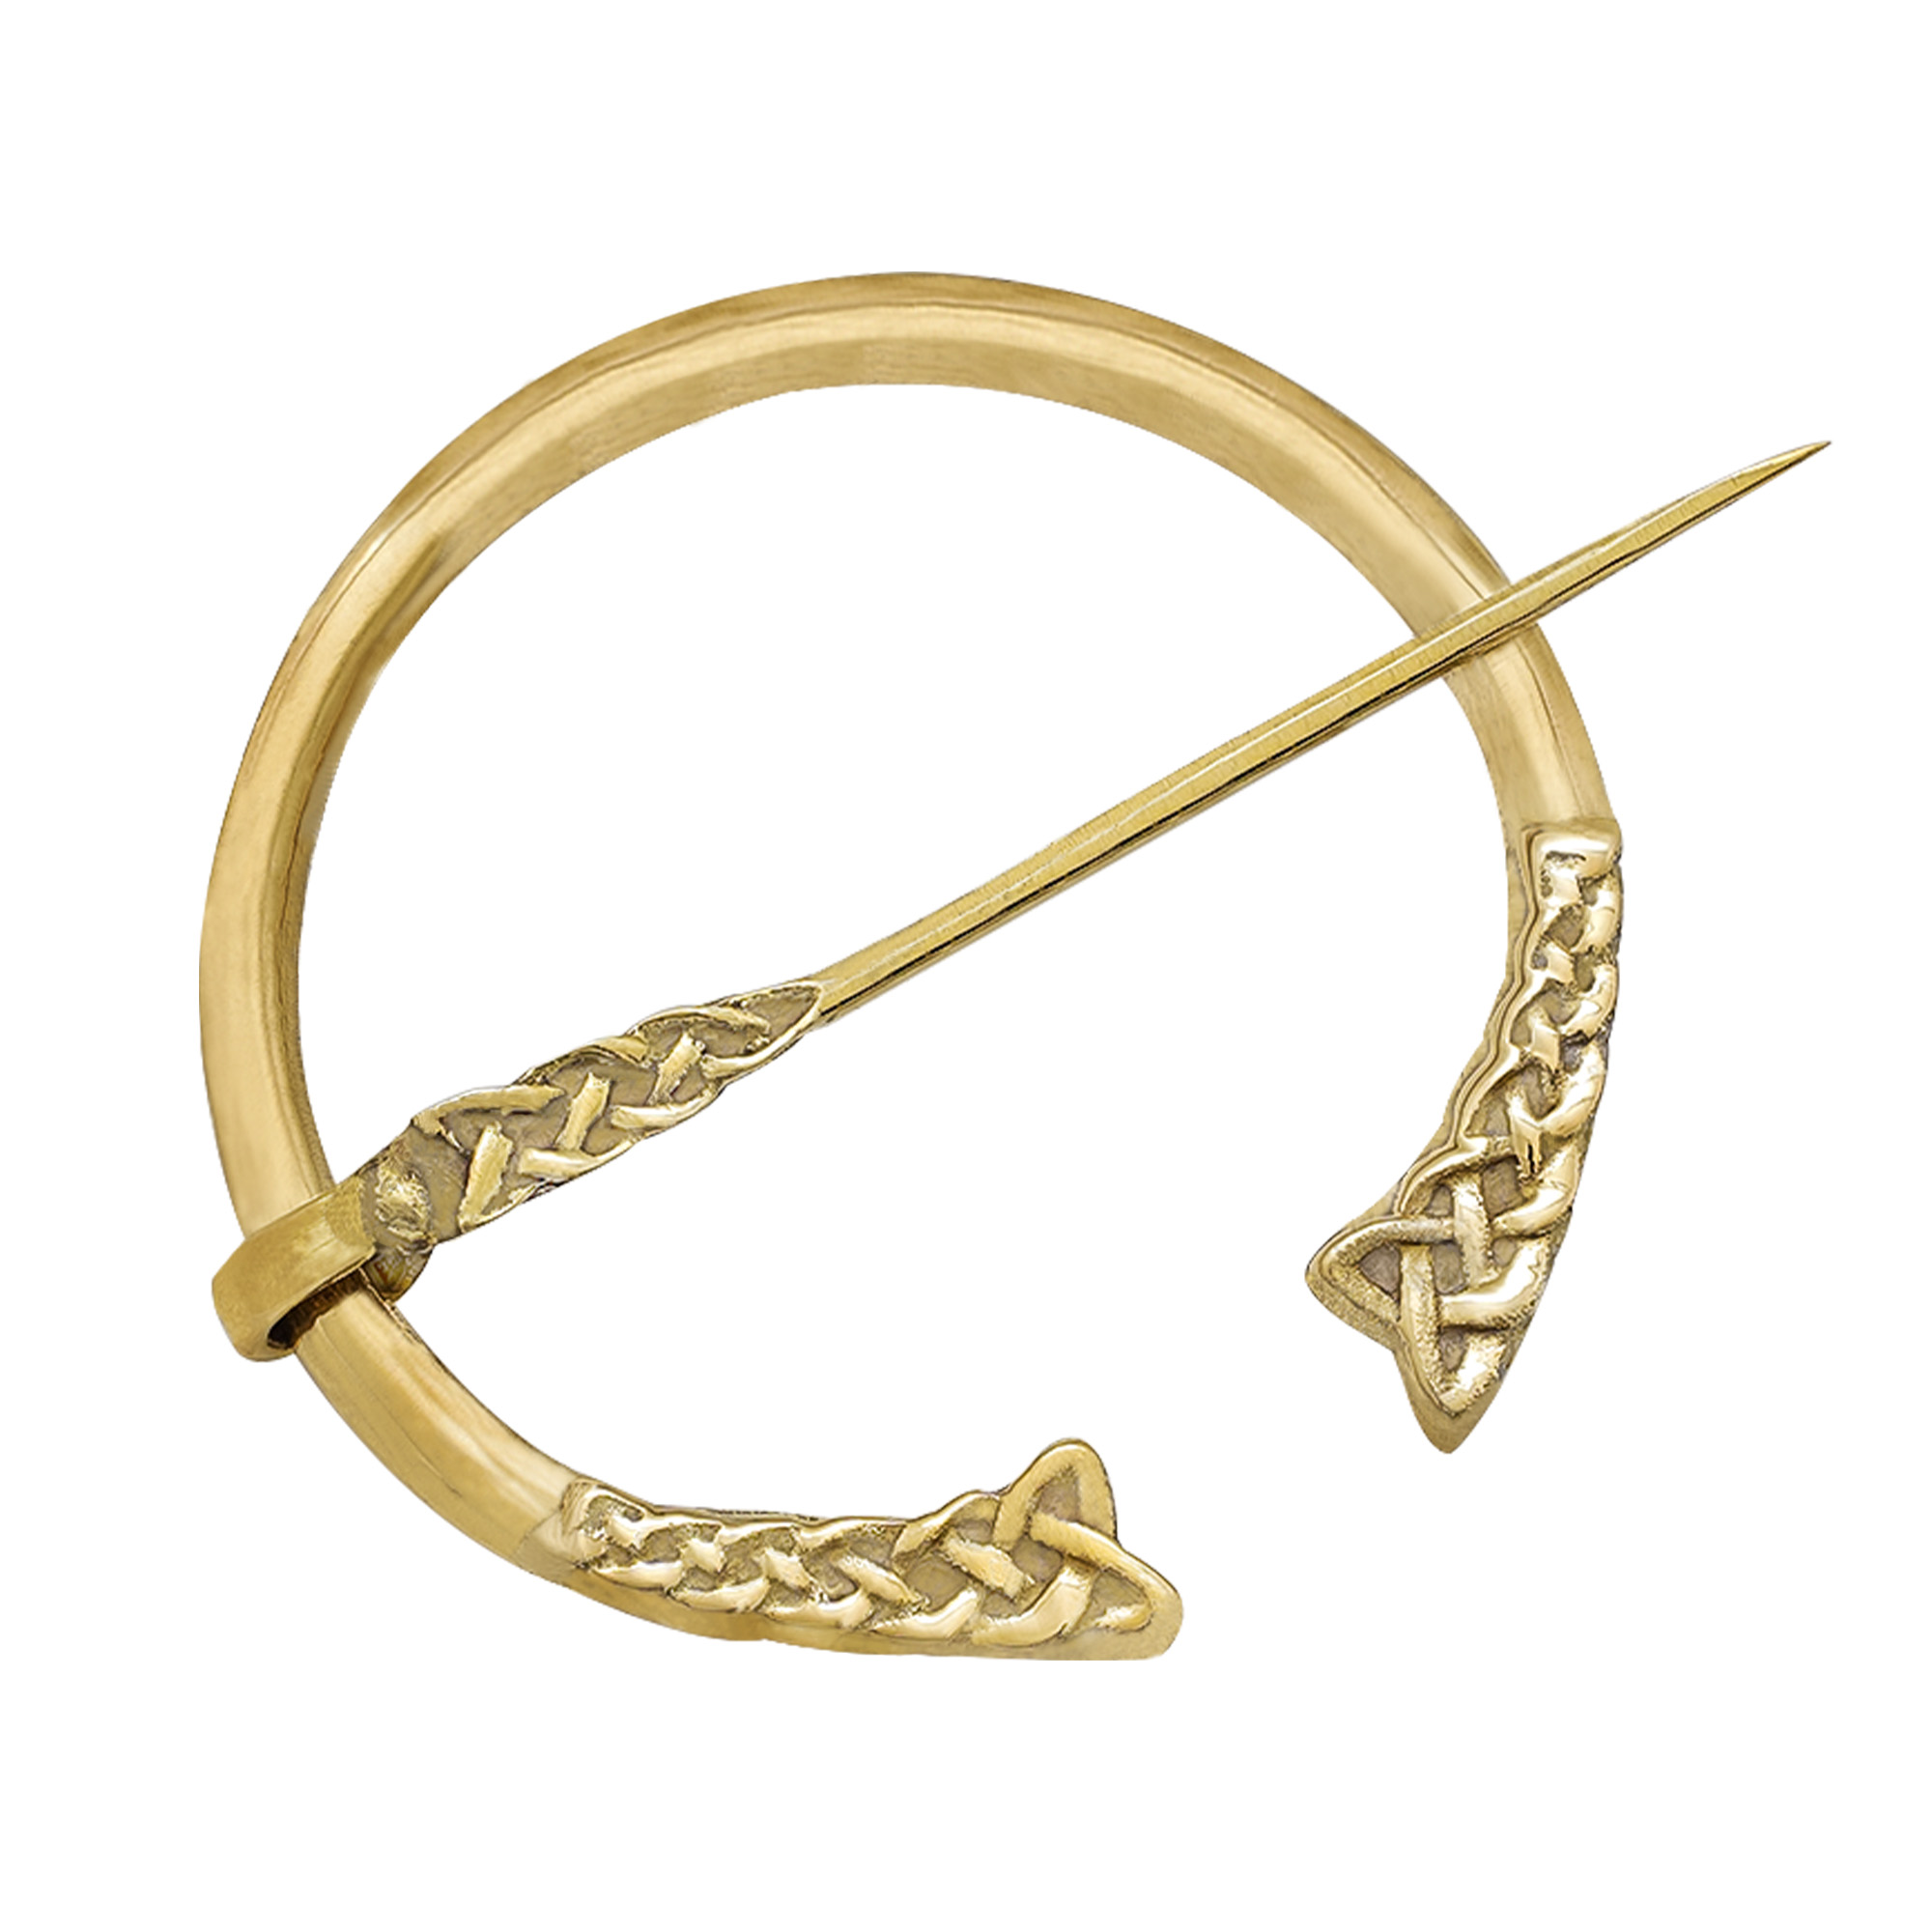 ✨ Pure Brass Celtic Penannular Brooch Cloak Pin Clasp - Medieval